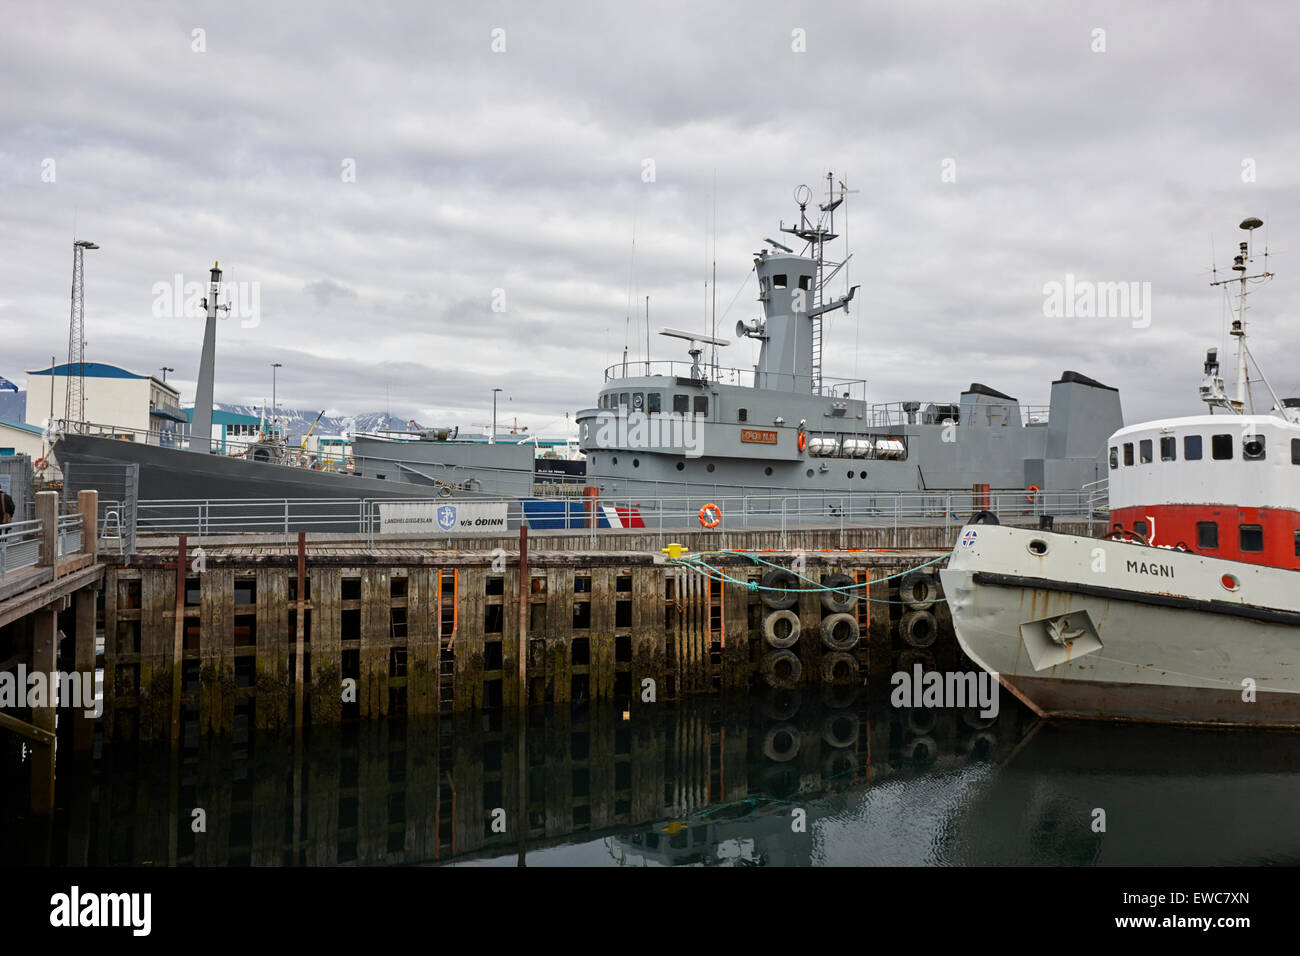 odinn coastguard ship at Reykjavik Maritime Museum Iceland Stock Photo